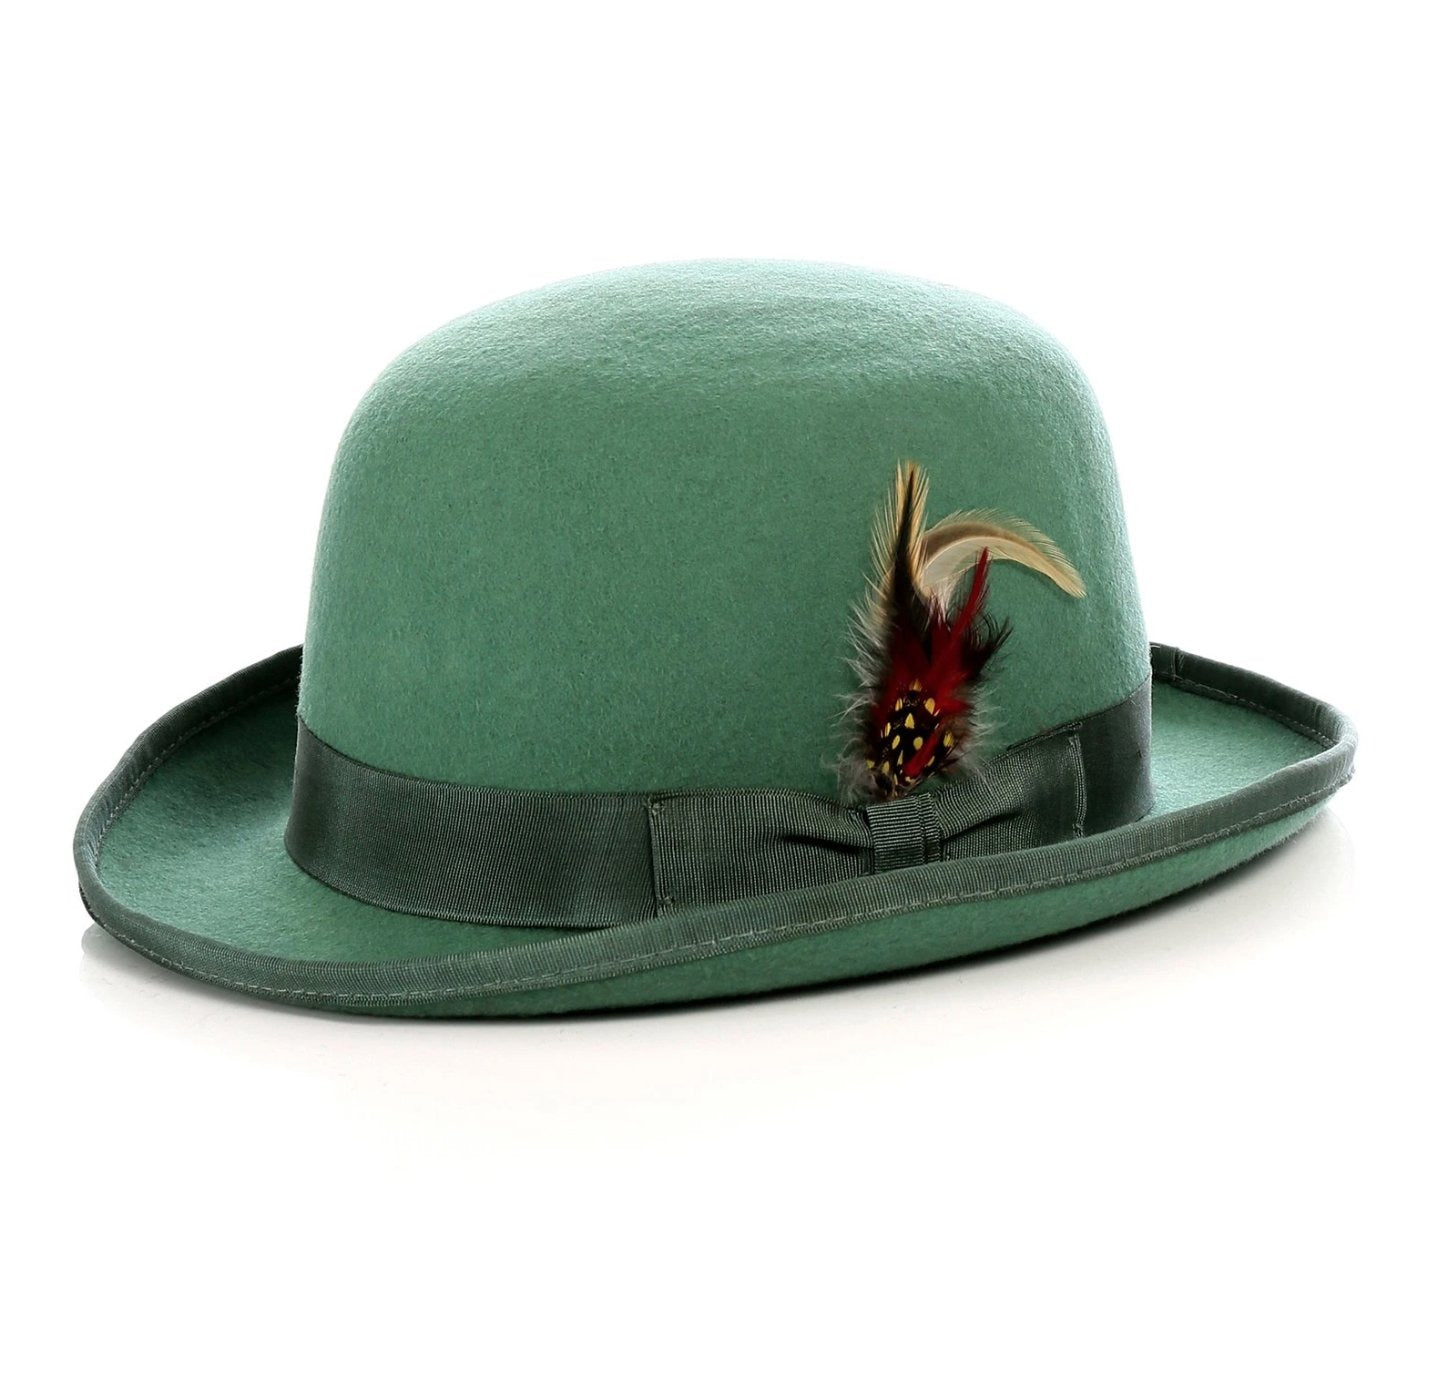 Mens Derby Hat in Emerald Green